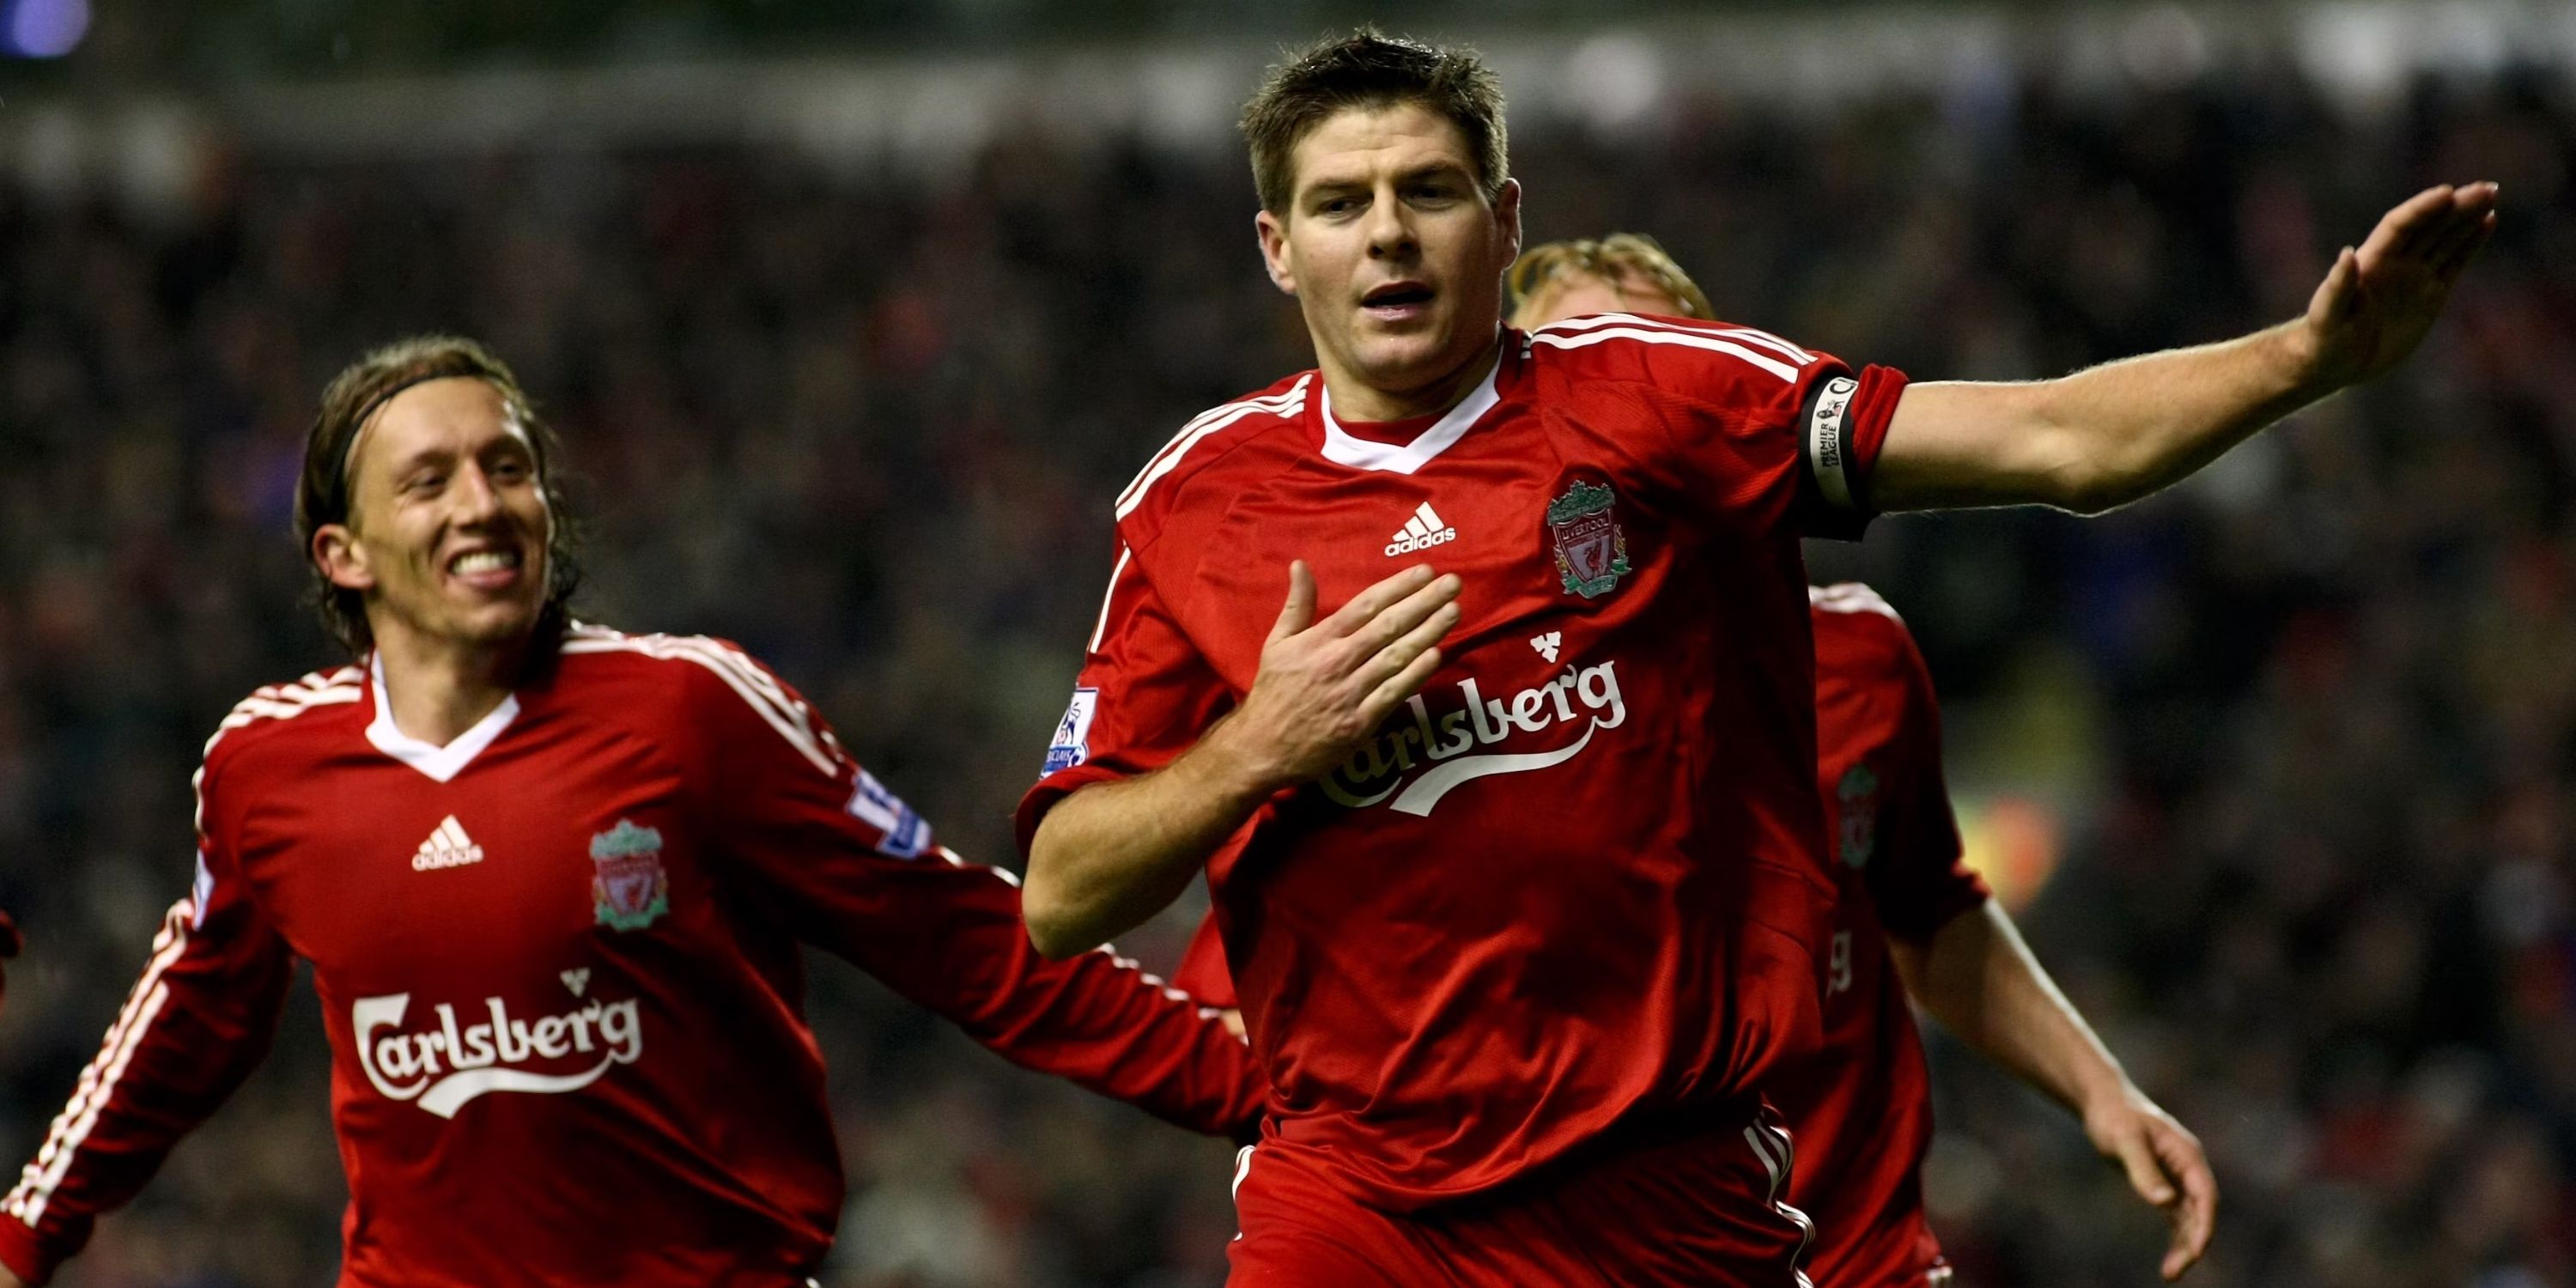 Steven Gerrard celebrates